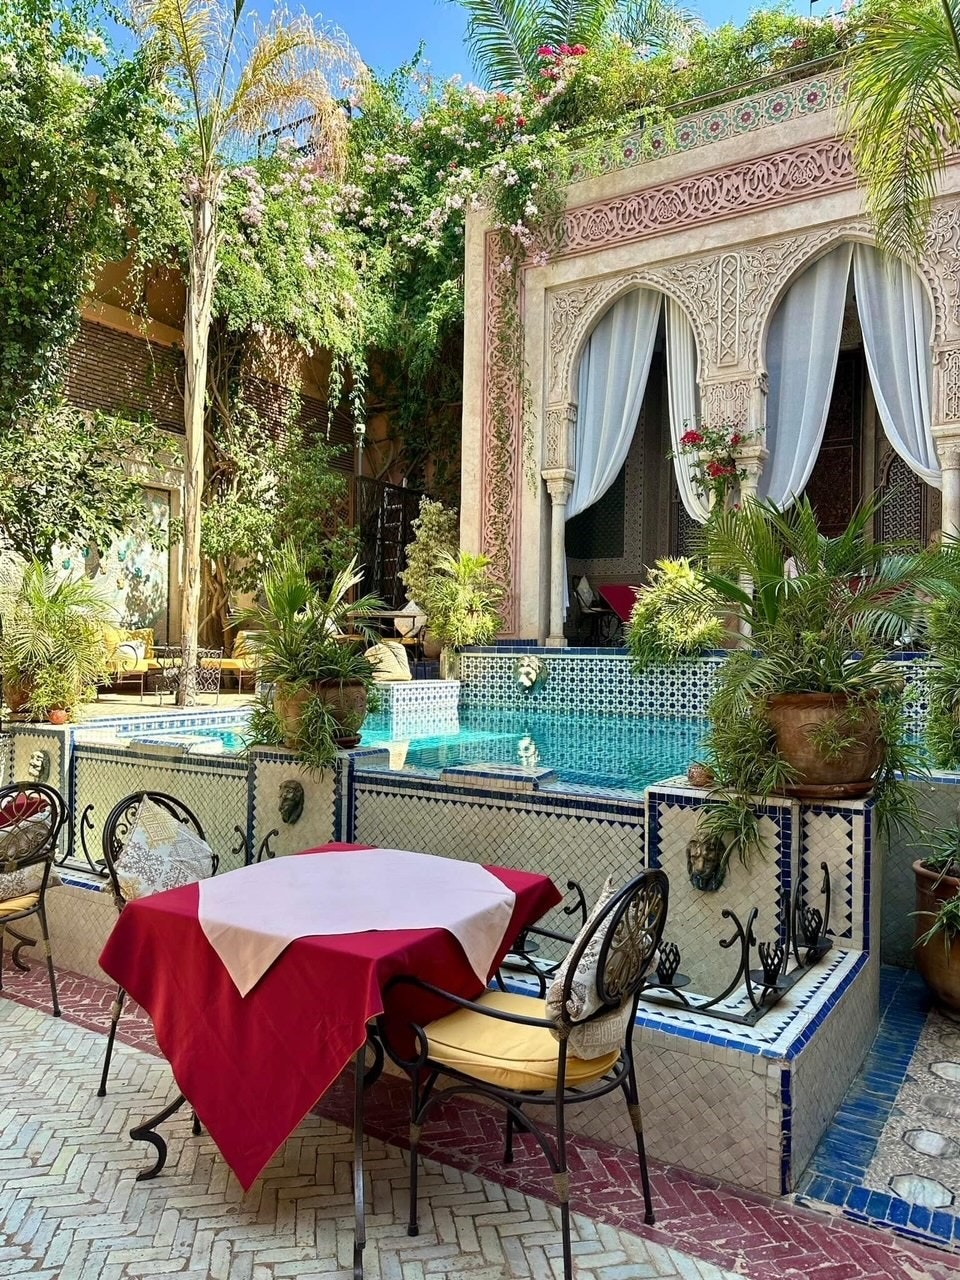 Morocco: My favourite destination - image 3